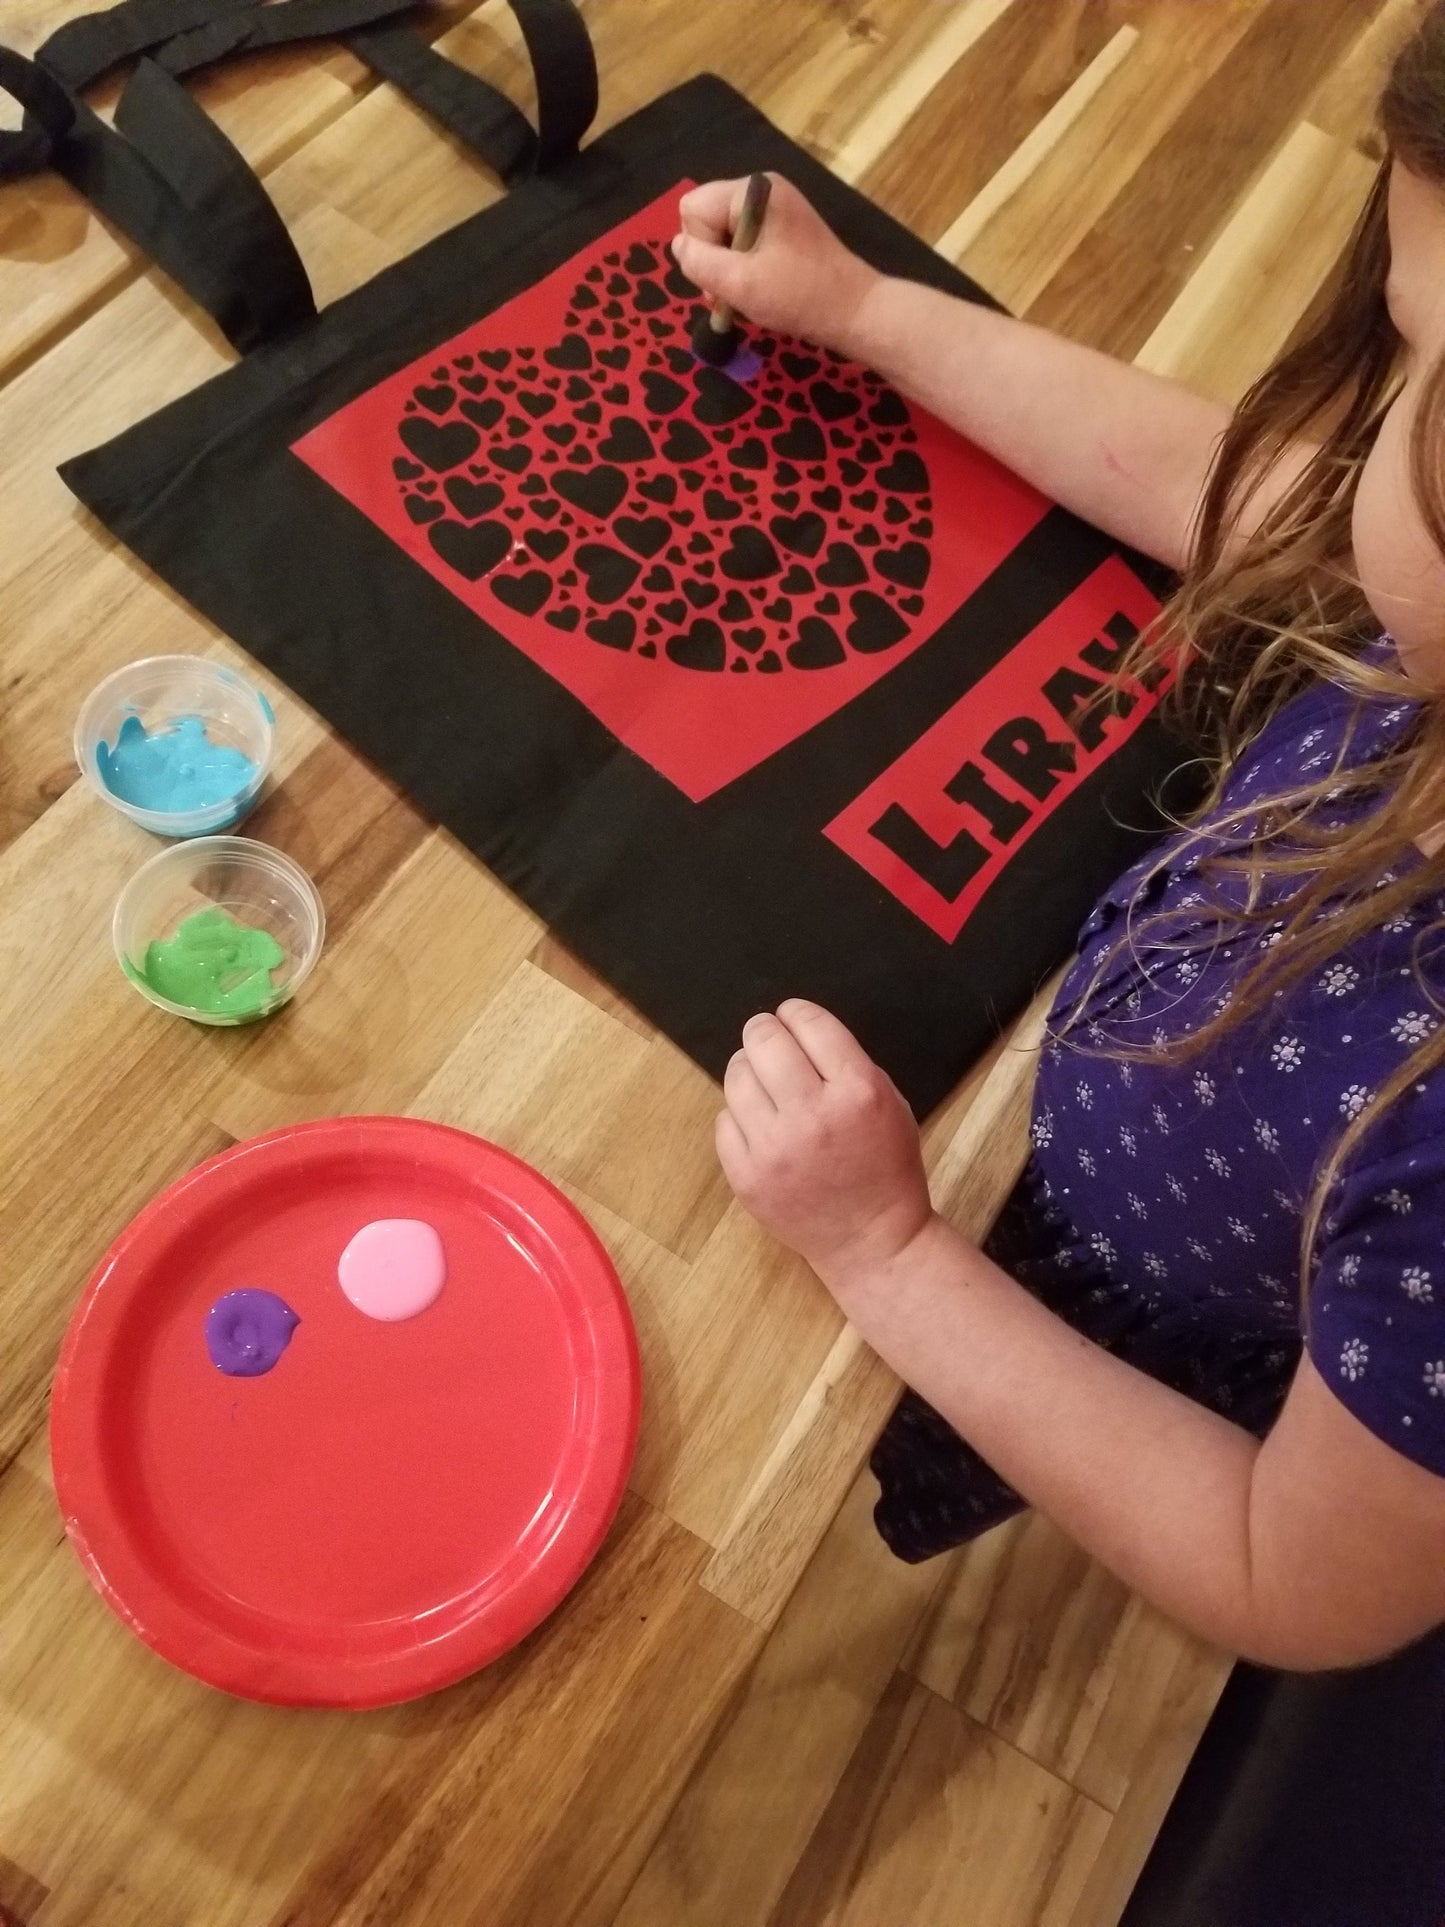 Kids party craft activities, Art party paint kit DIY kit